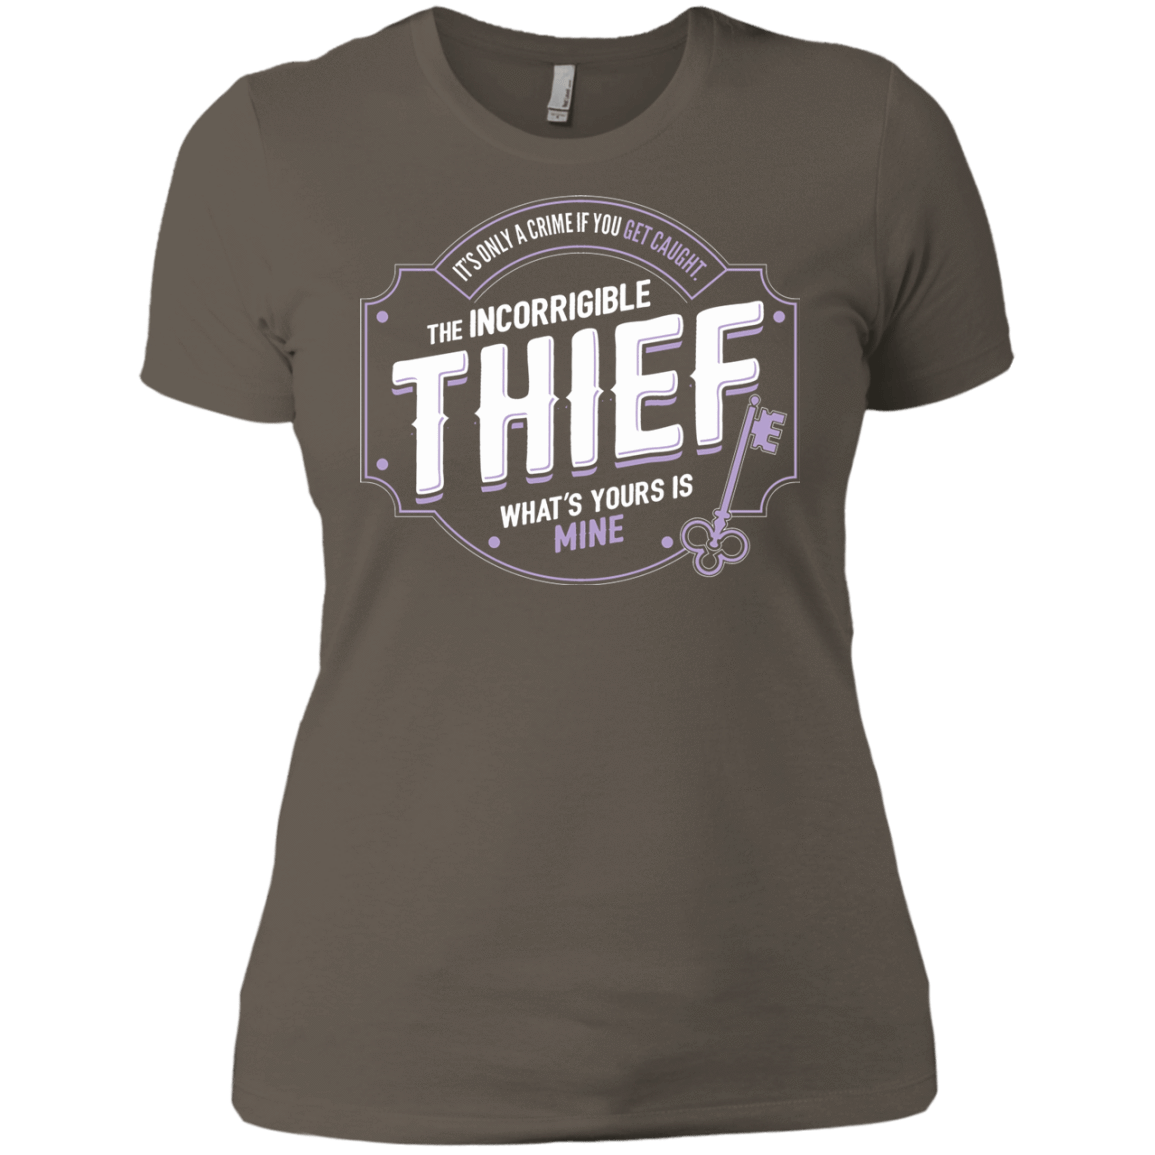 T-Shirts Warm Grey / X-Small Thief Women's Premium T-Shirt